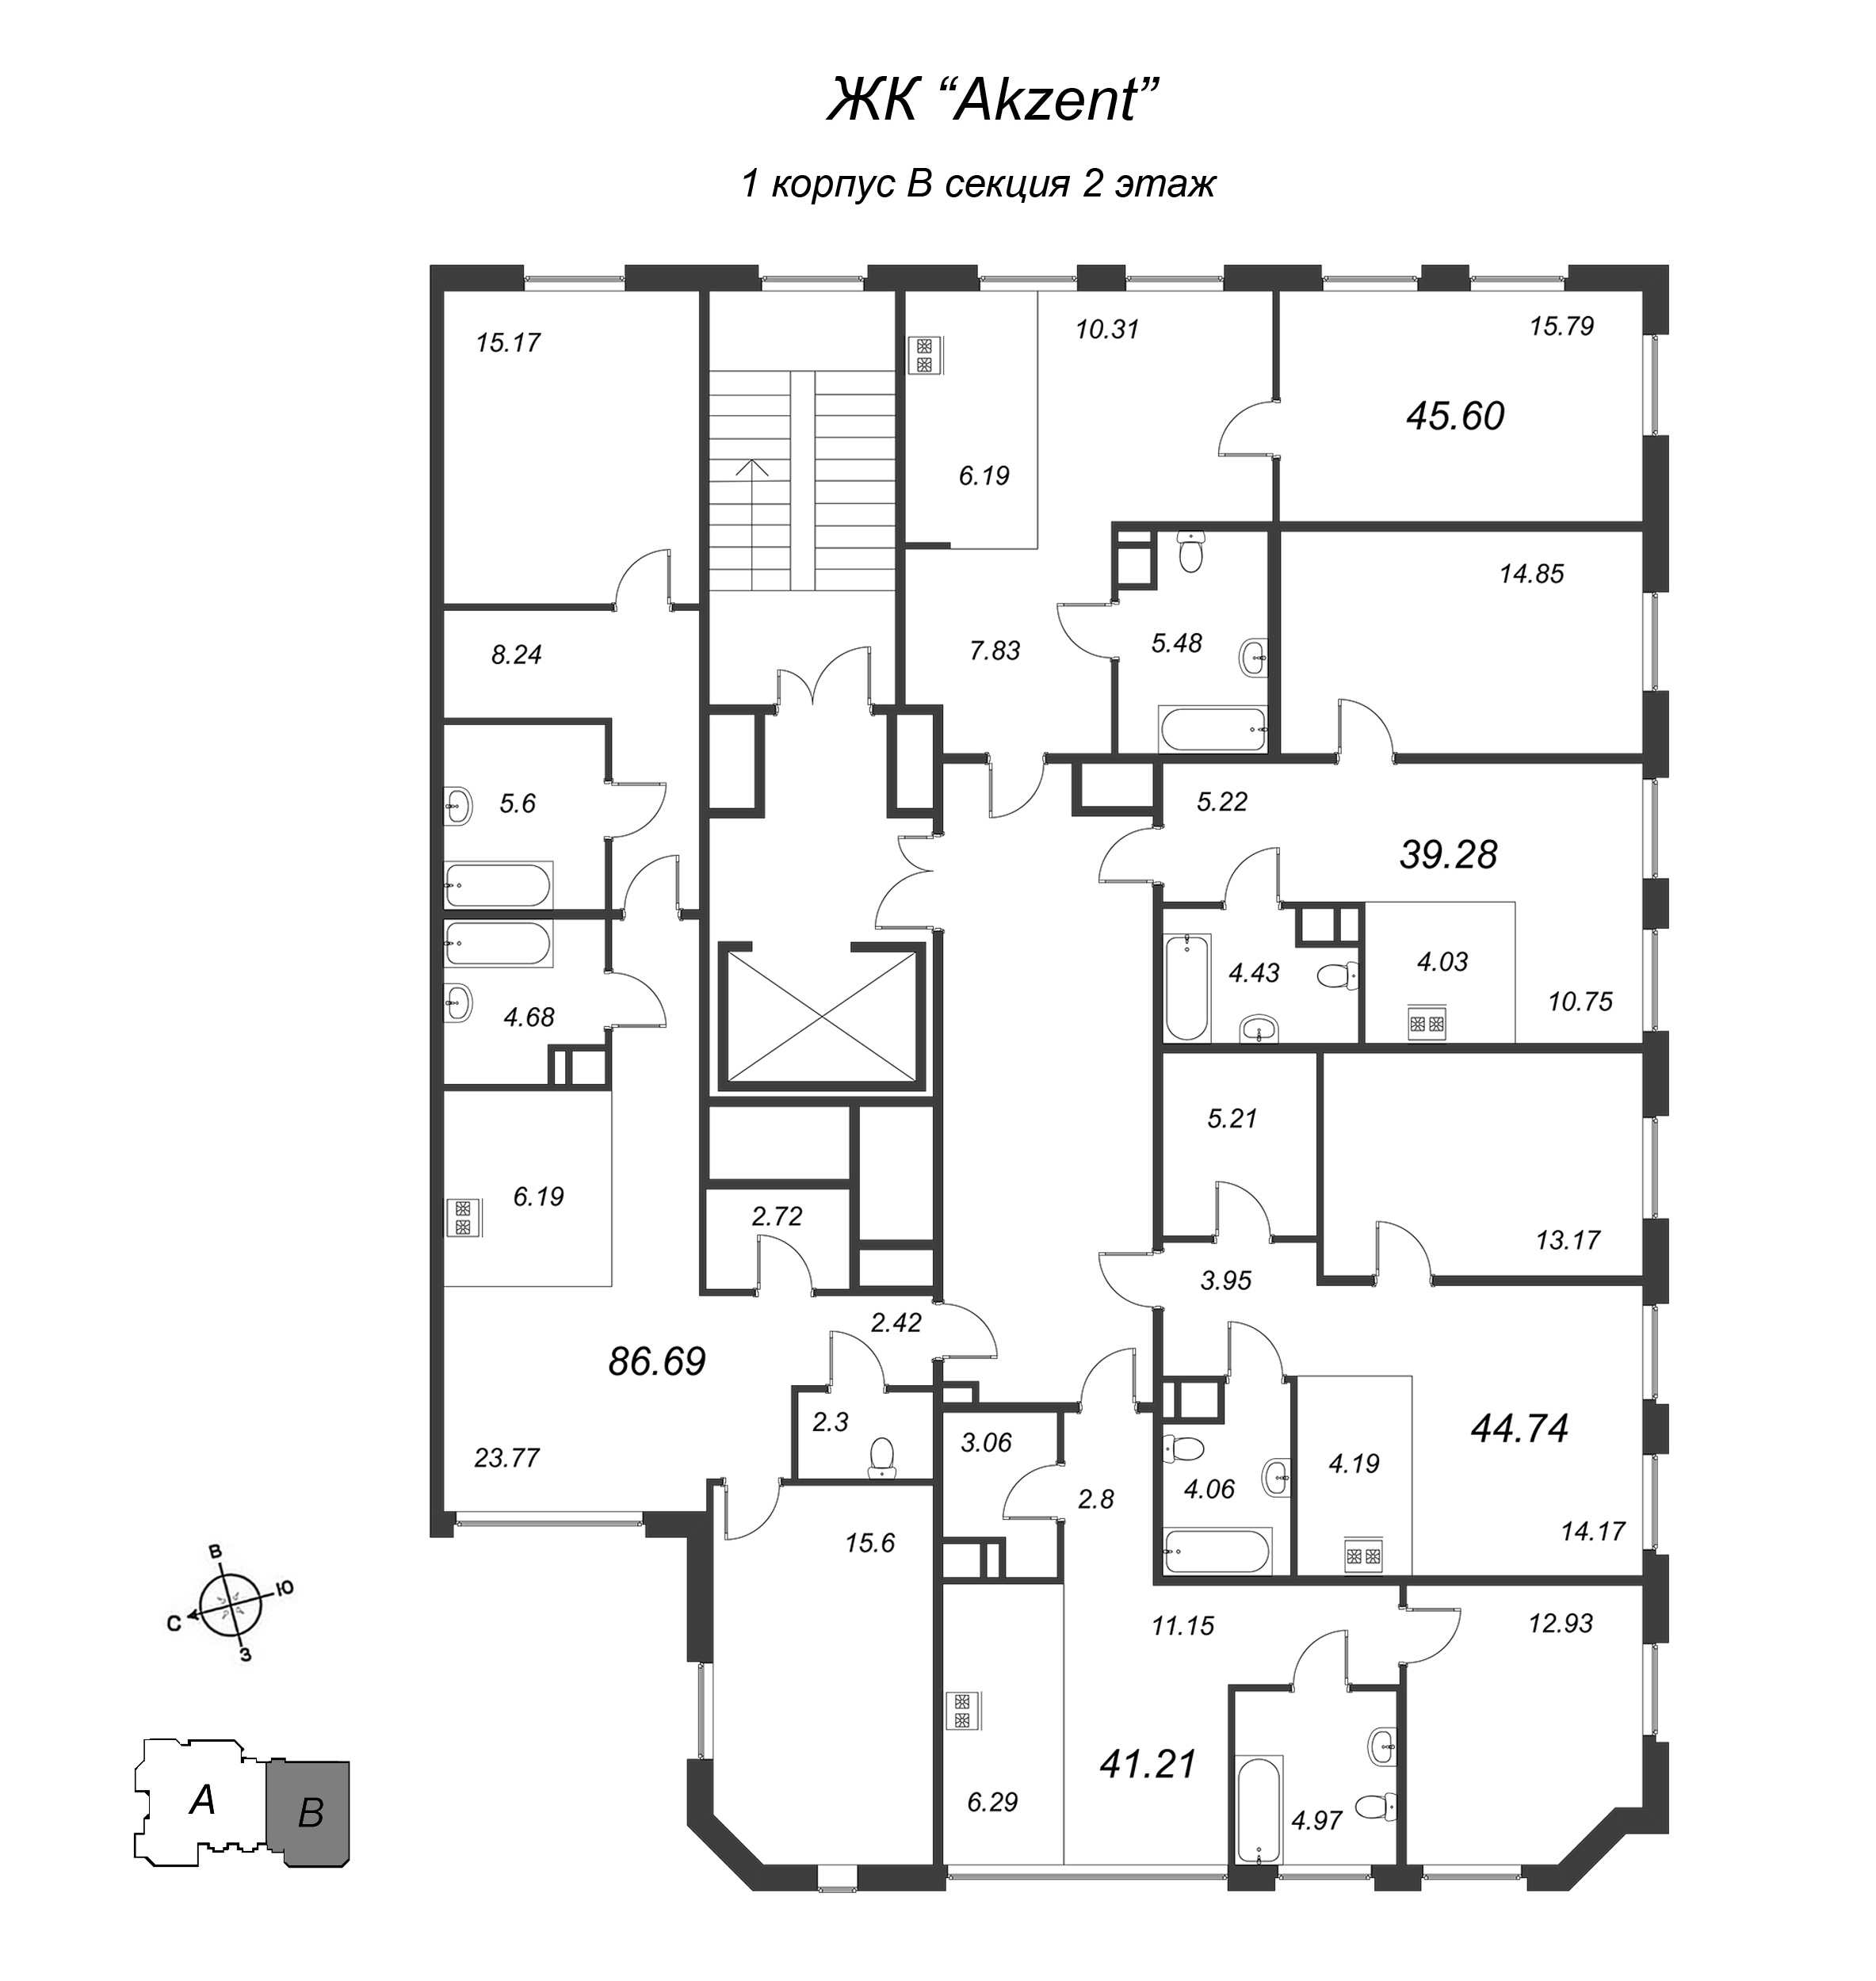 2-комнатная (Евро) квартира, 44.74 м² - планировка этажа